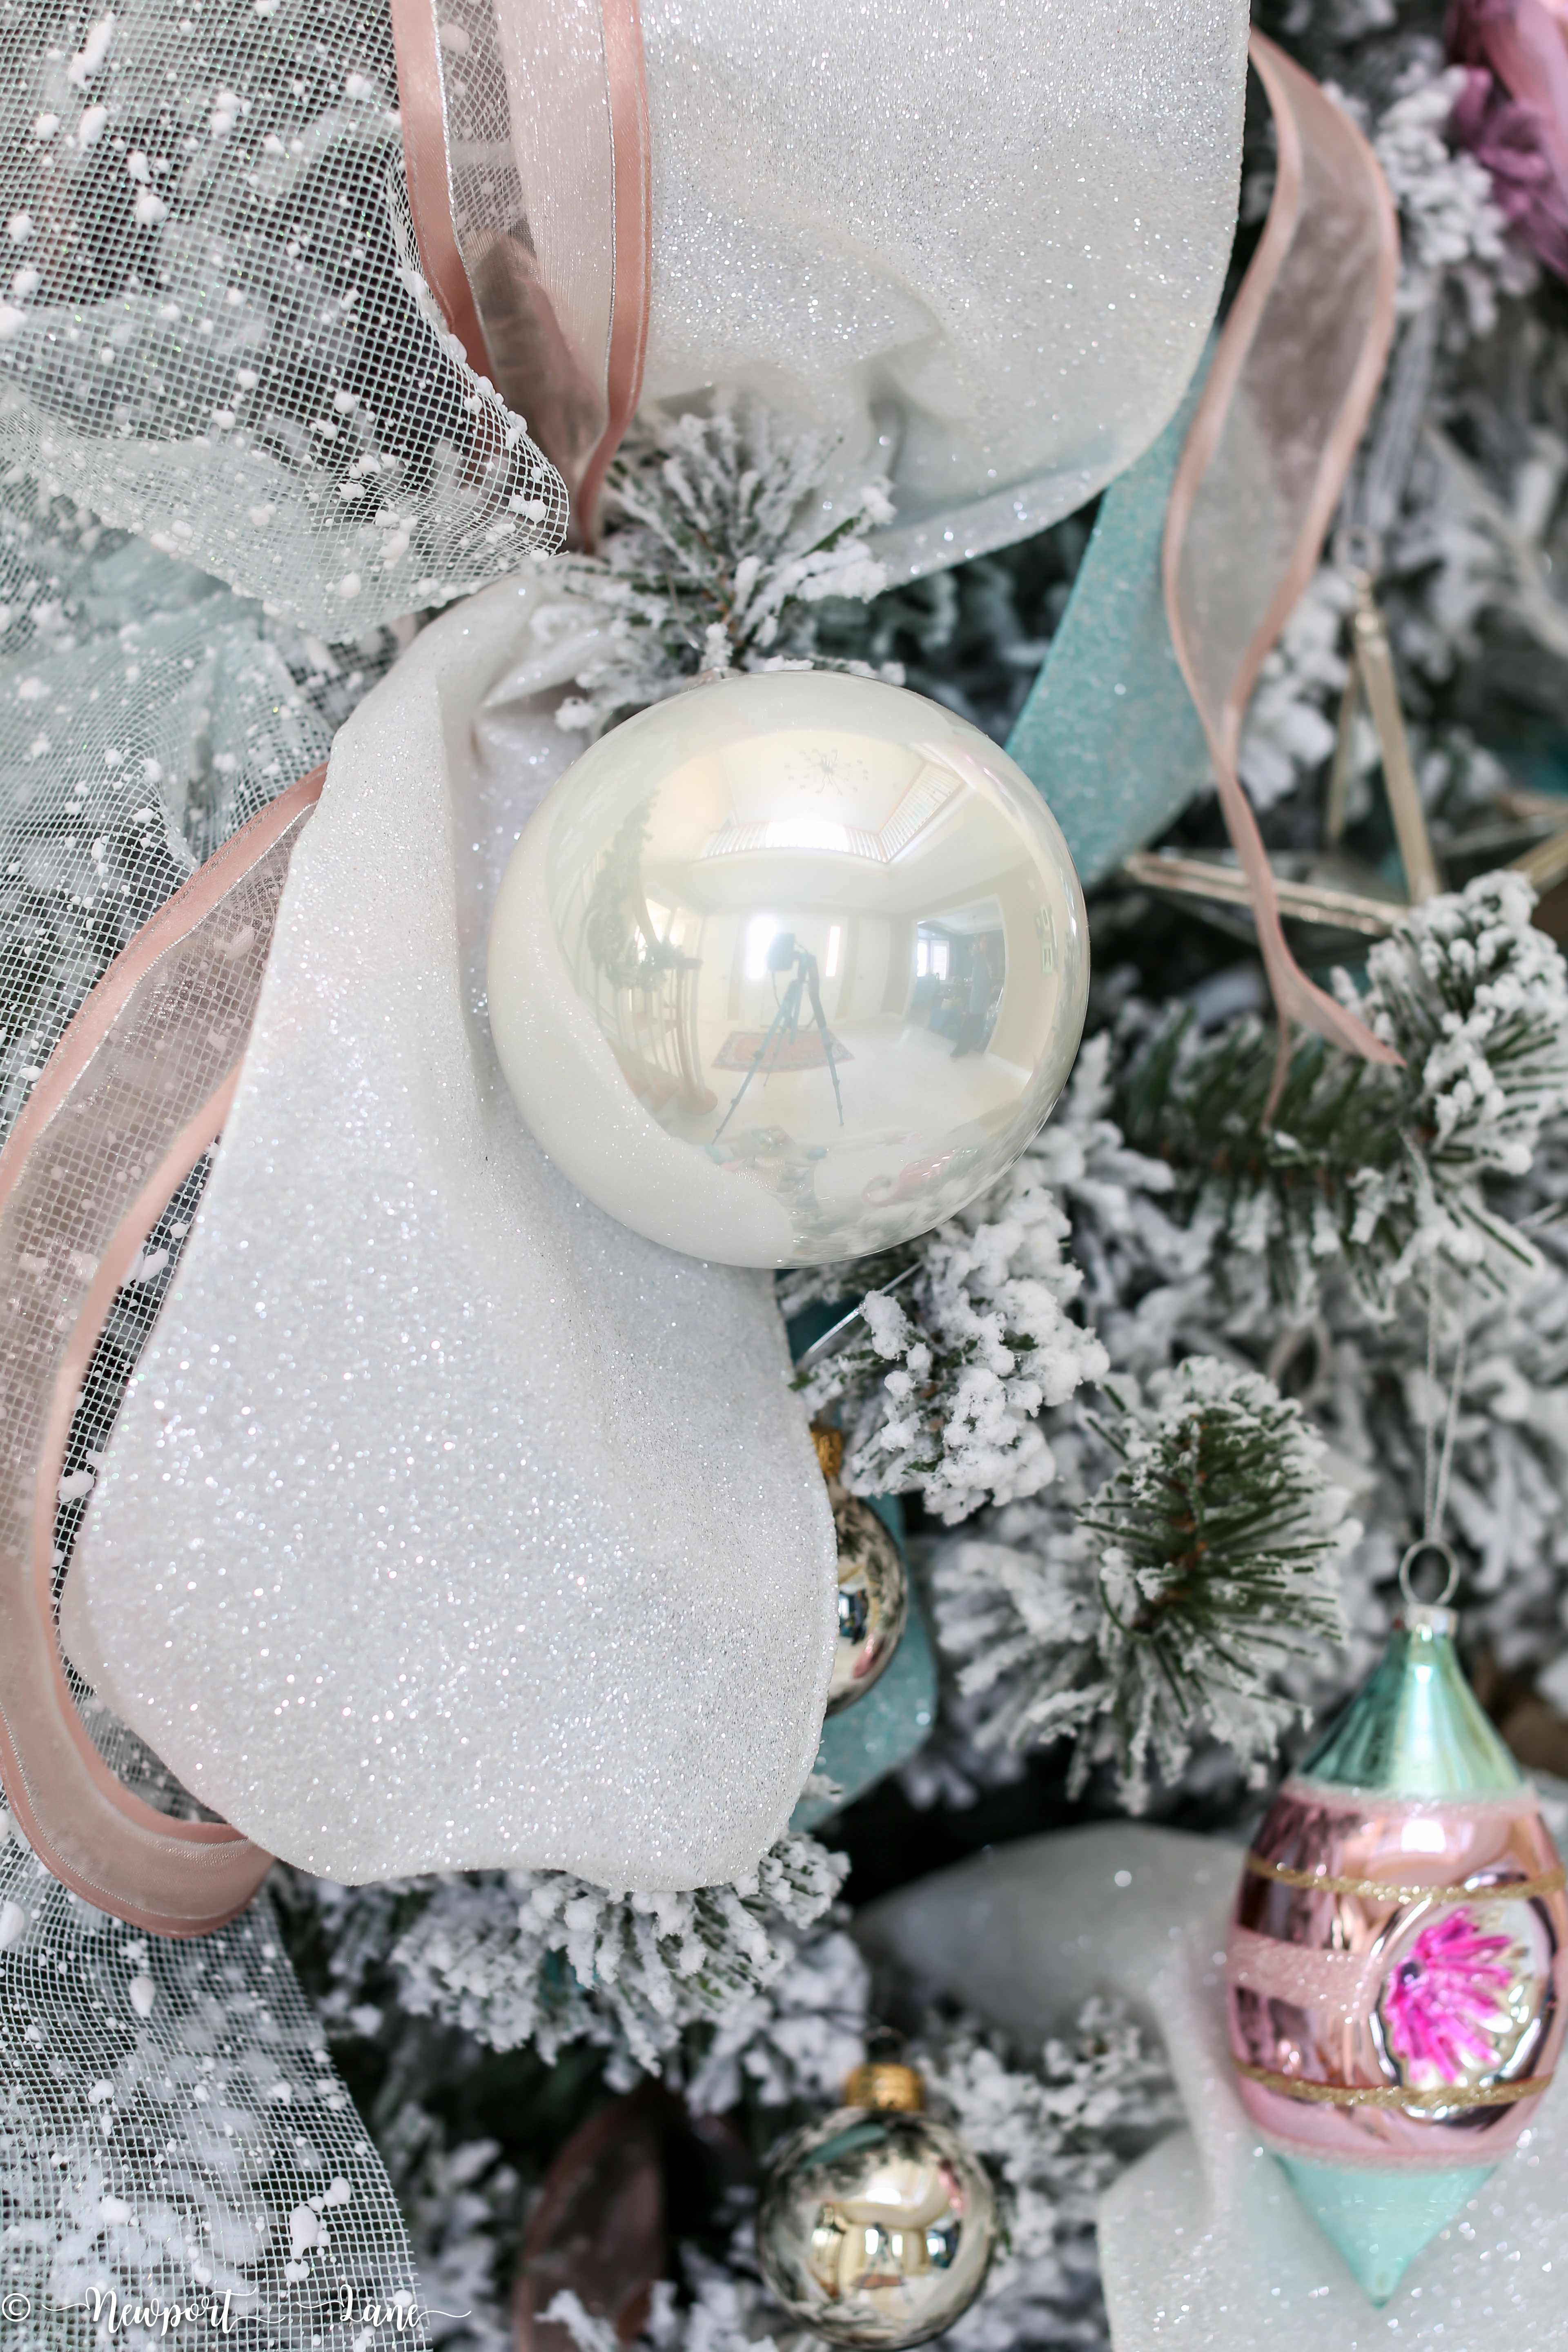 Blush, white and blue Christmas tree. Blue ornaments. Gold ornaments. White ribbon. #christmastree #christmasdecorations